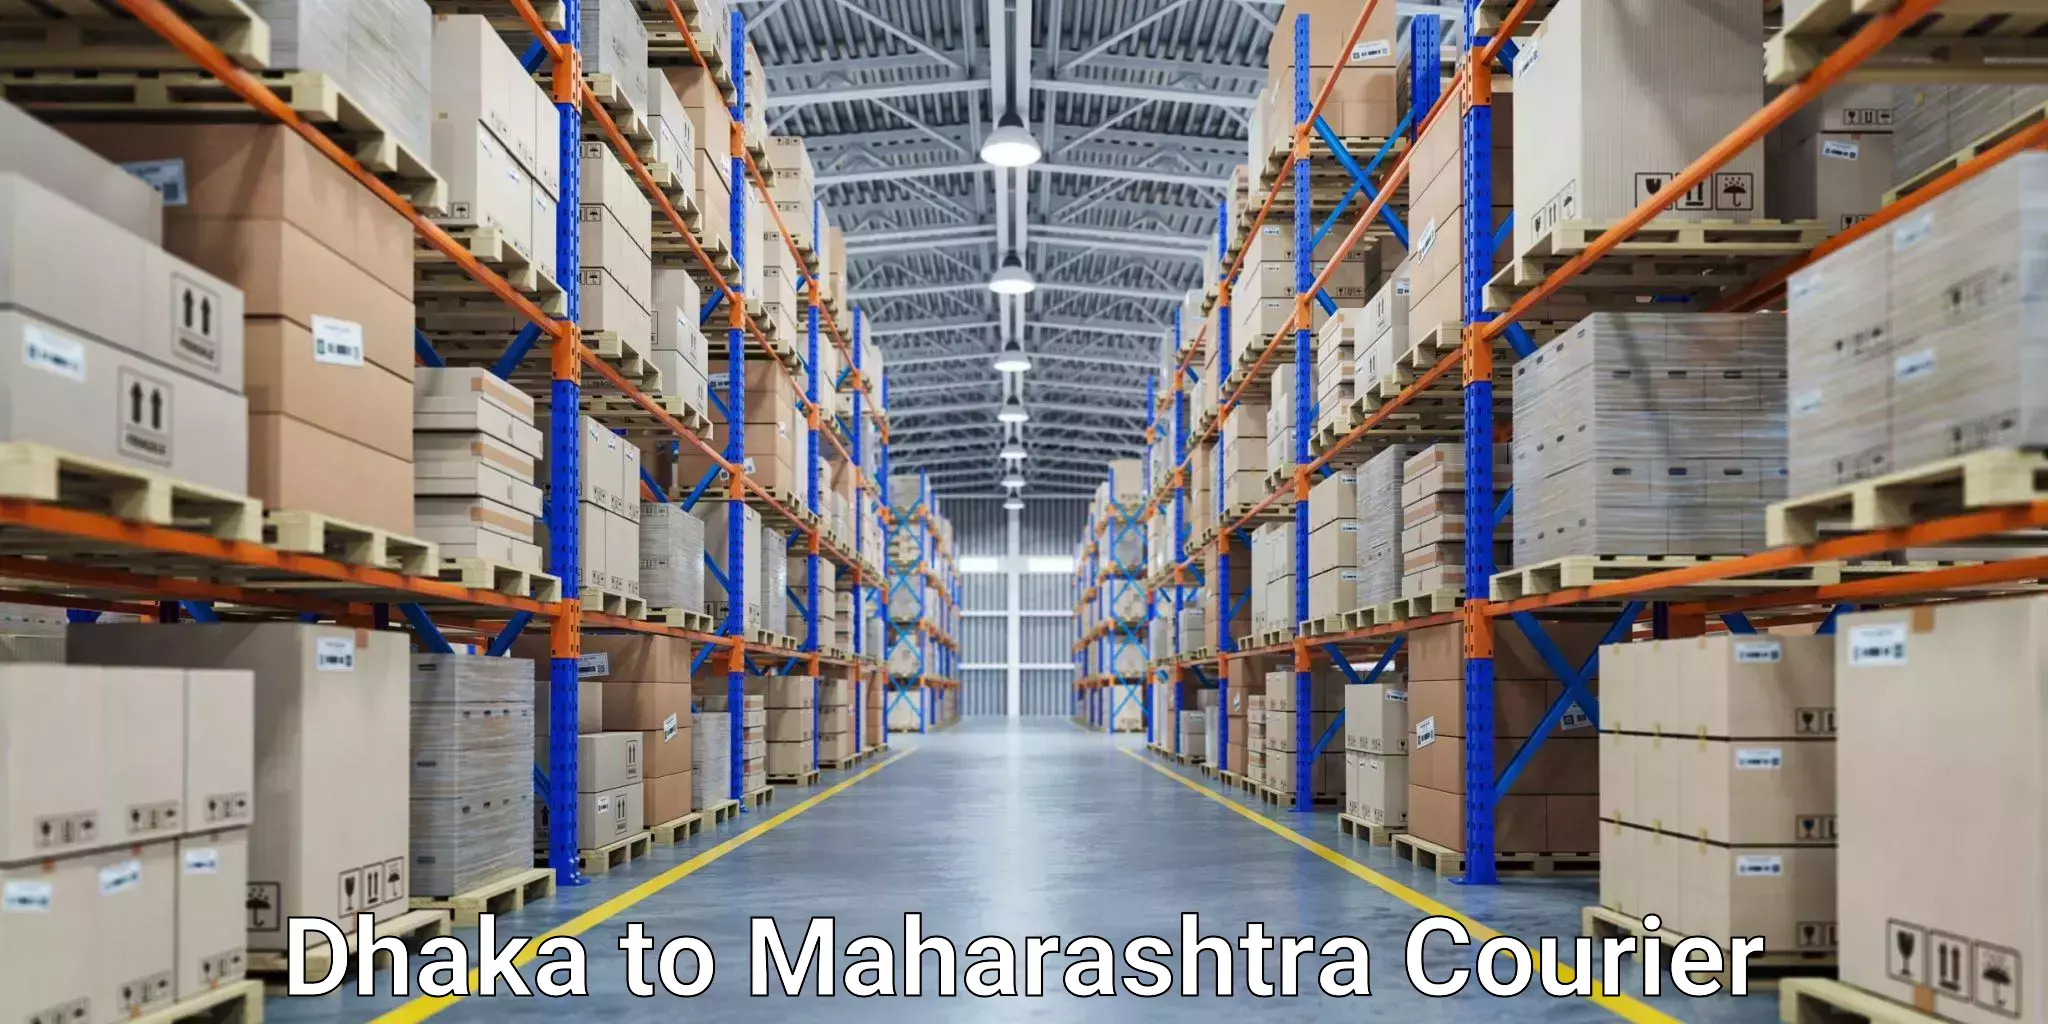 Global logistics network Dhaka to Maharashtra